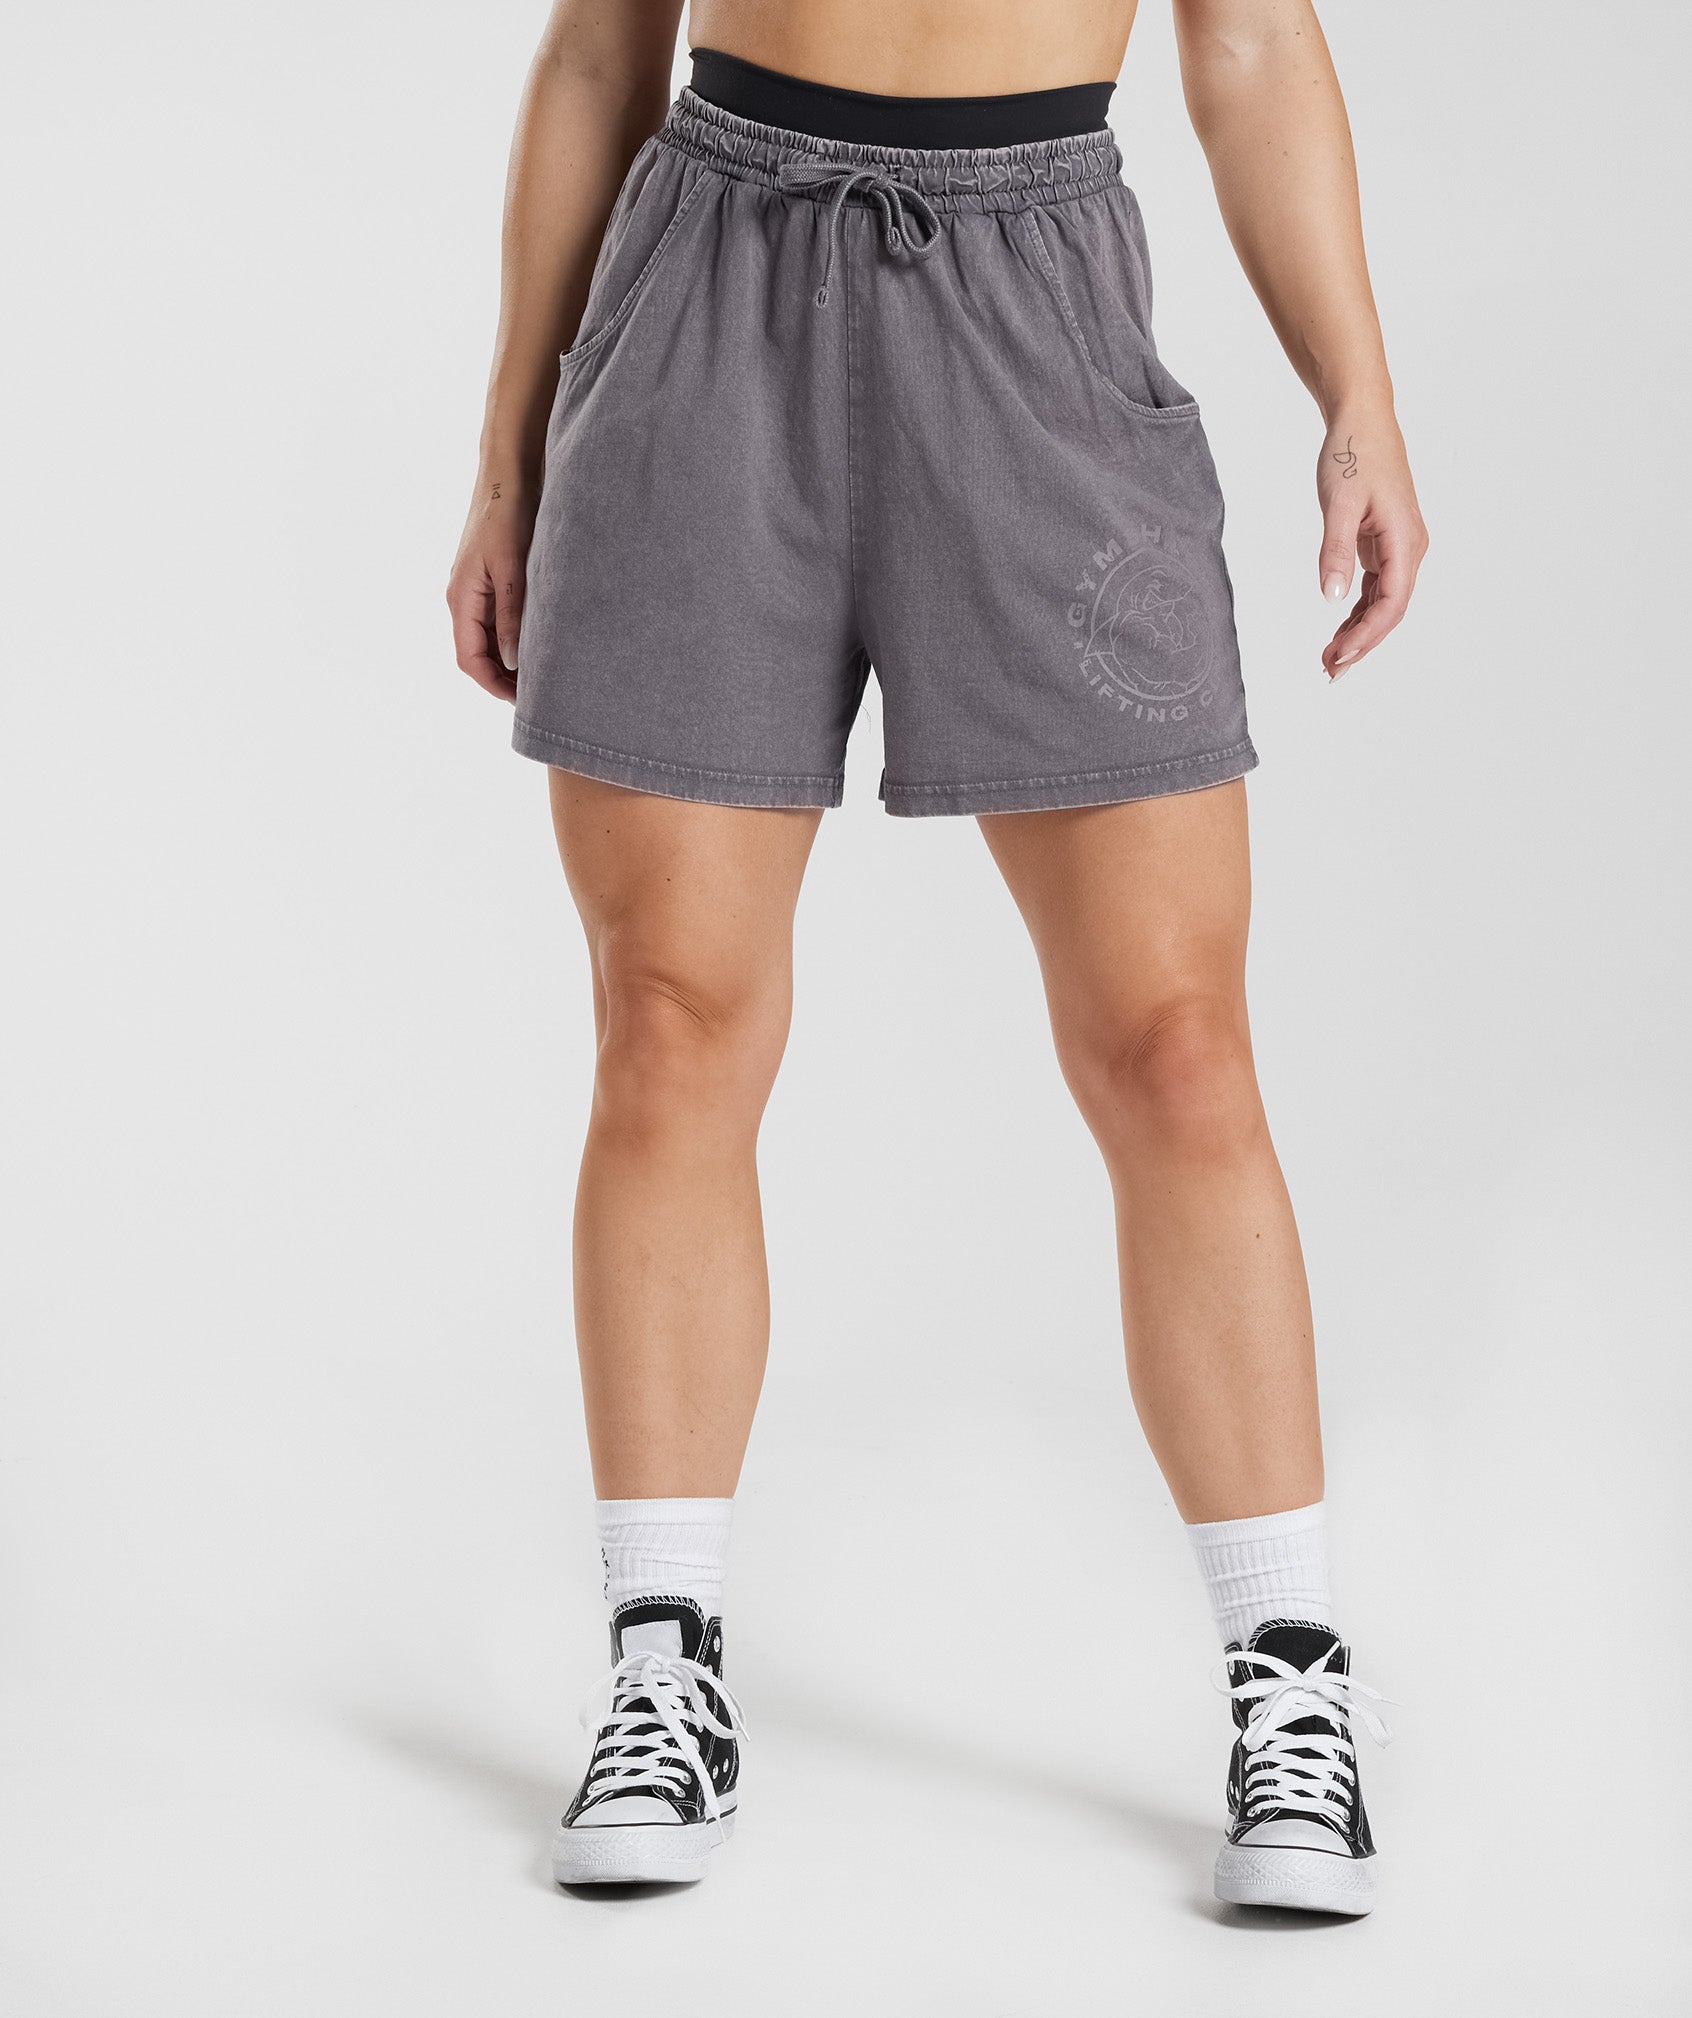 Legacy Loose Shorts in Titanium Grey/Acid Wash